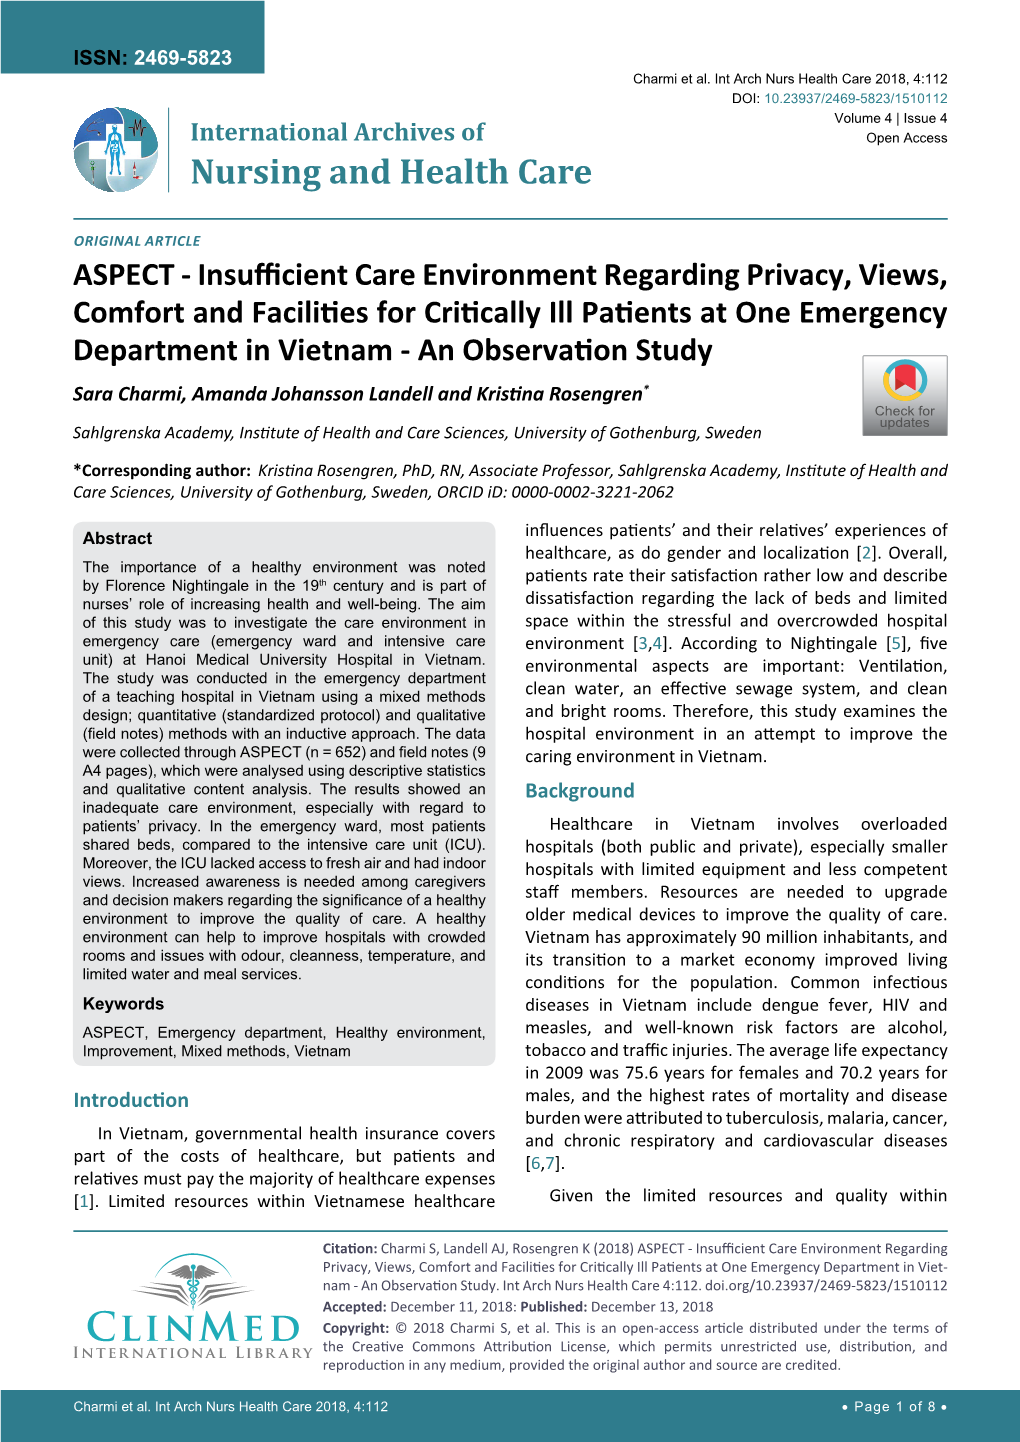 Insufficient Care Environment Regarding Privacy, Views, Comfort